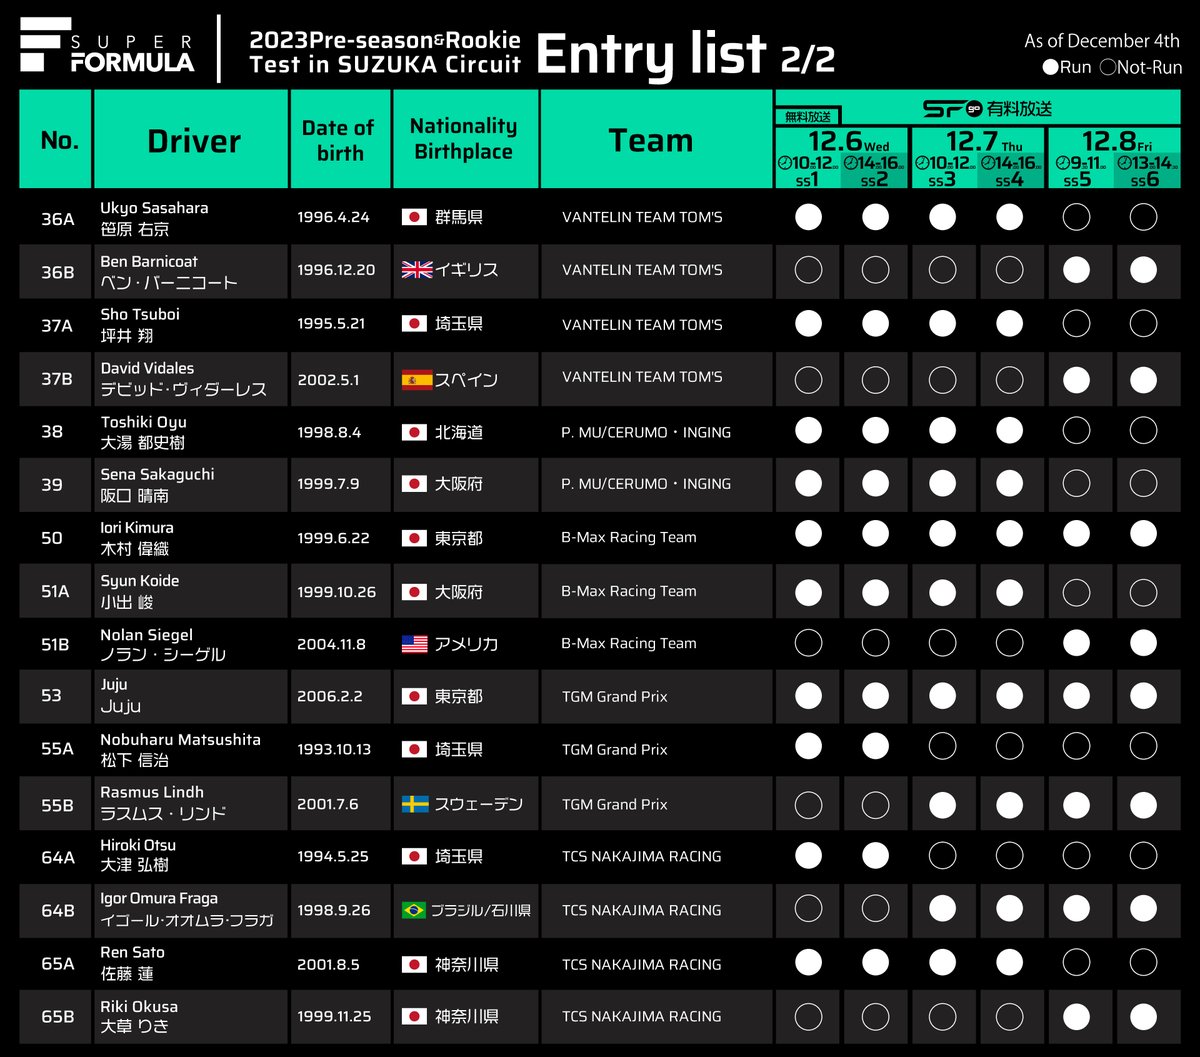 2023 #SUPERFORMULA Pre-season & Rookie Test in SUZUKA Circuit Entry List 🗓December 6(Wed.) to 8(Fri.)